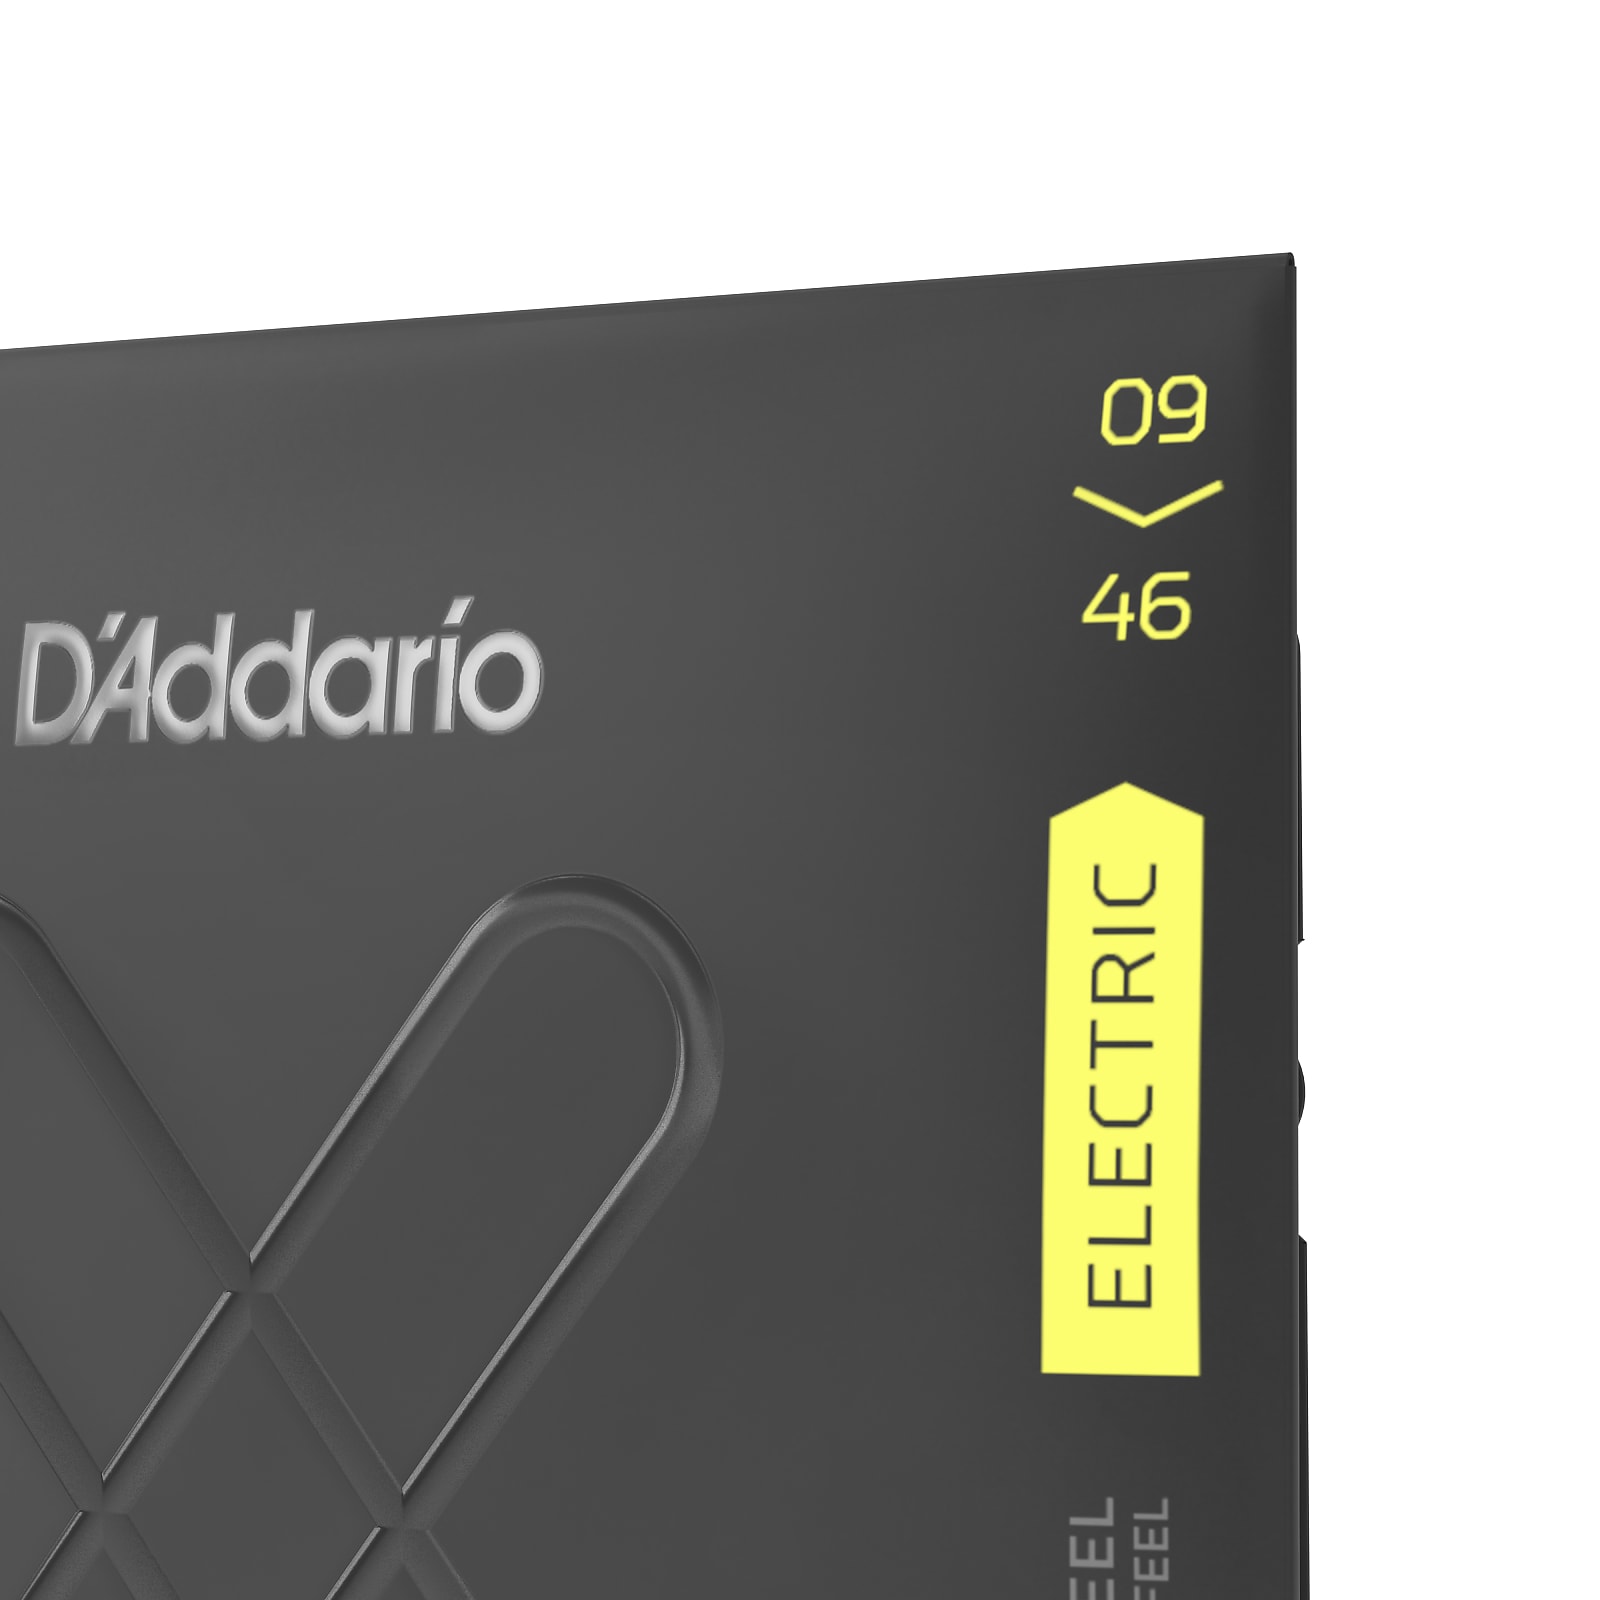 D'Addario XTE0946 XT Nickel-Plated Steel Electric Guitar Strings, Super Light T